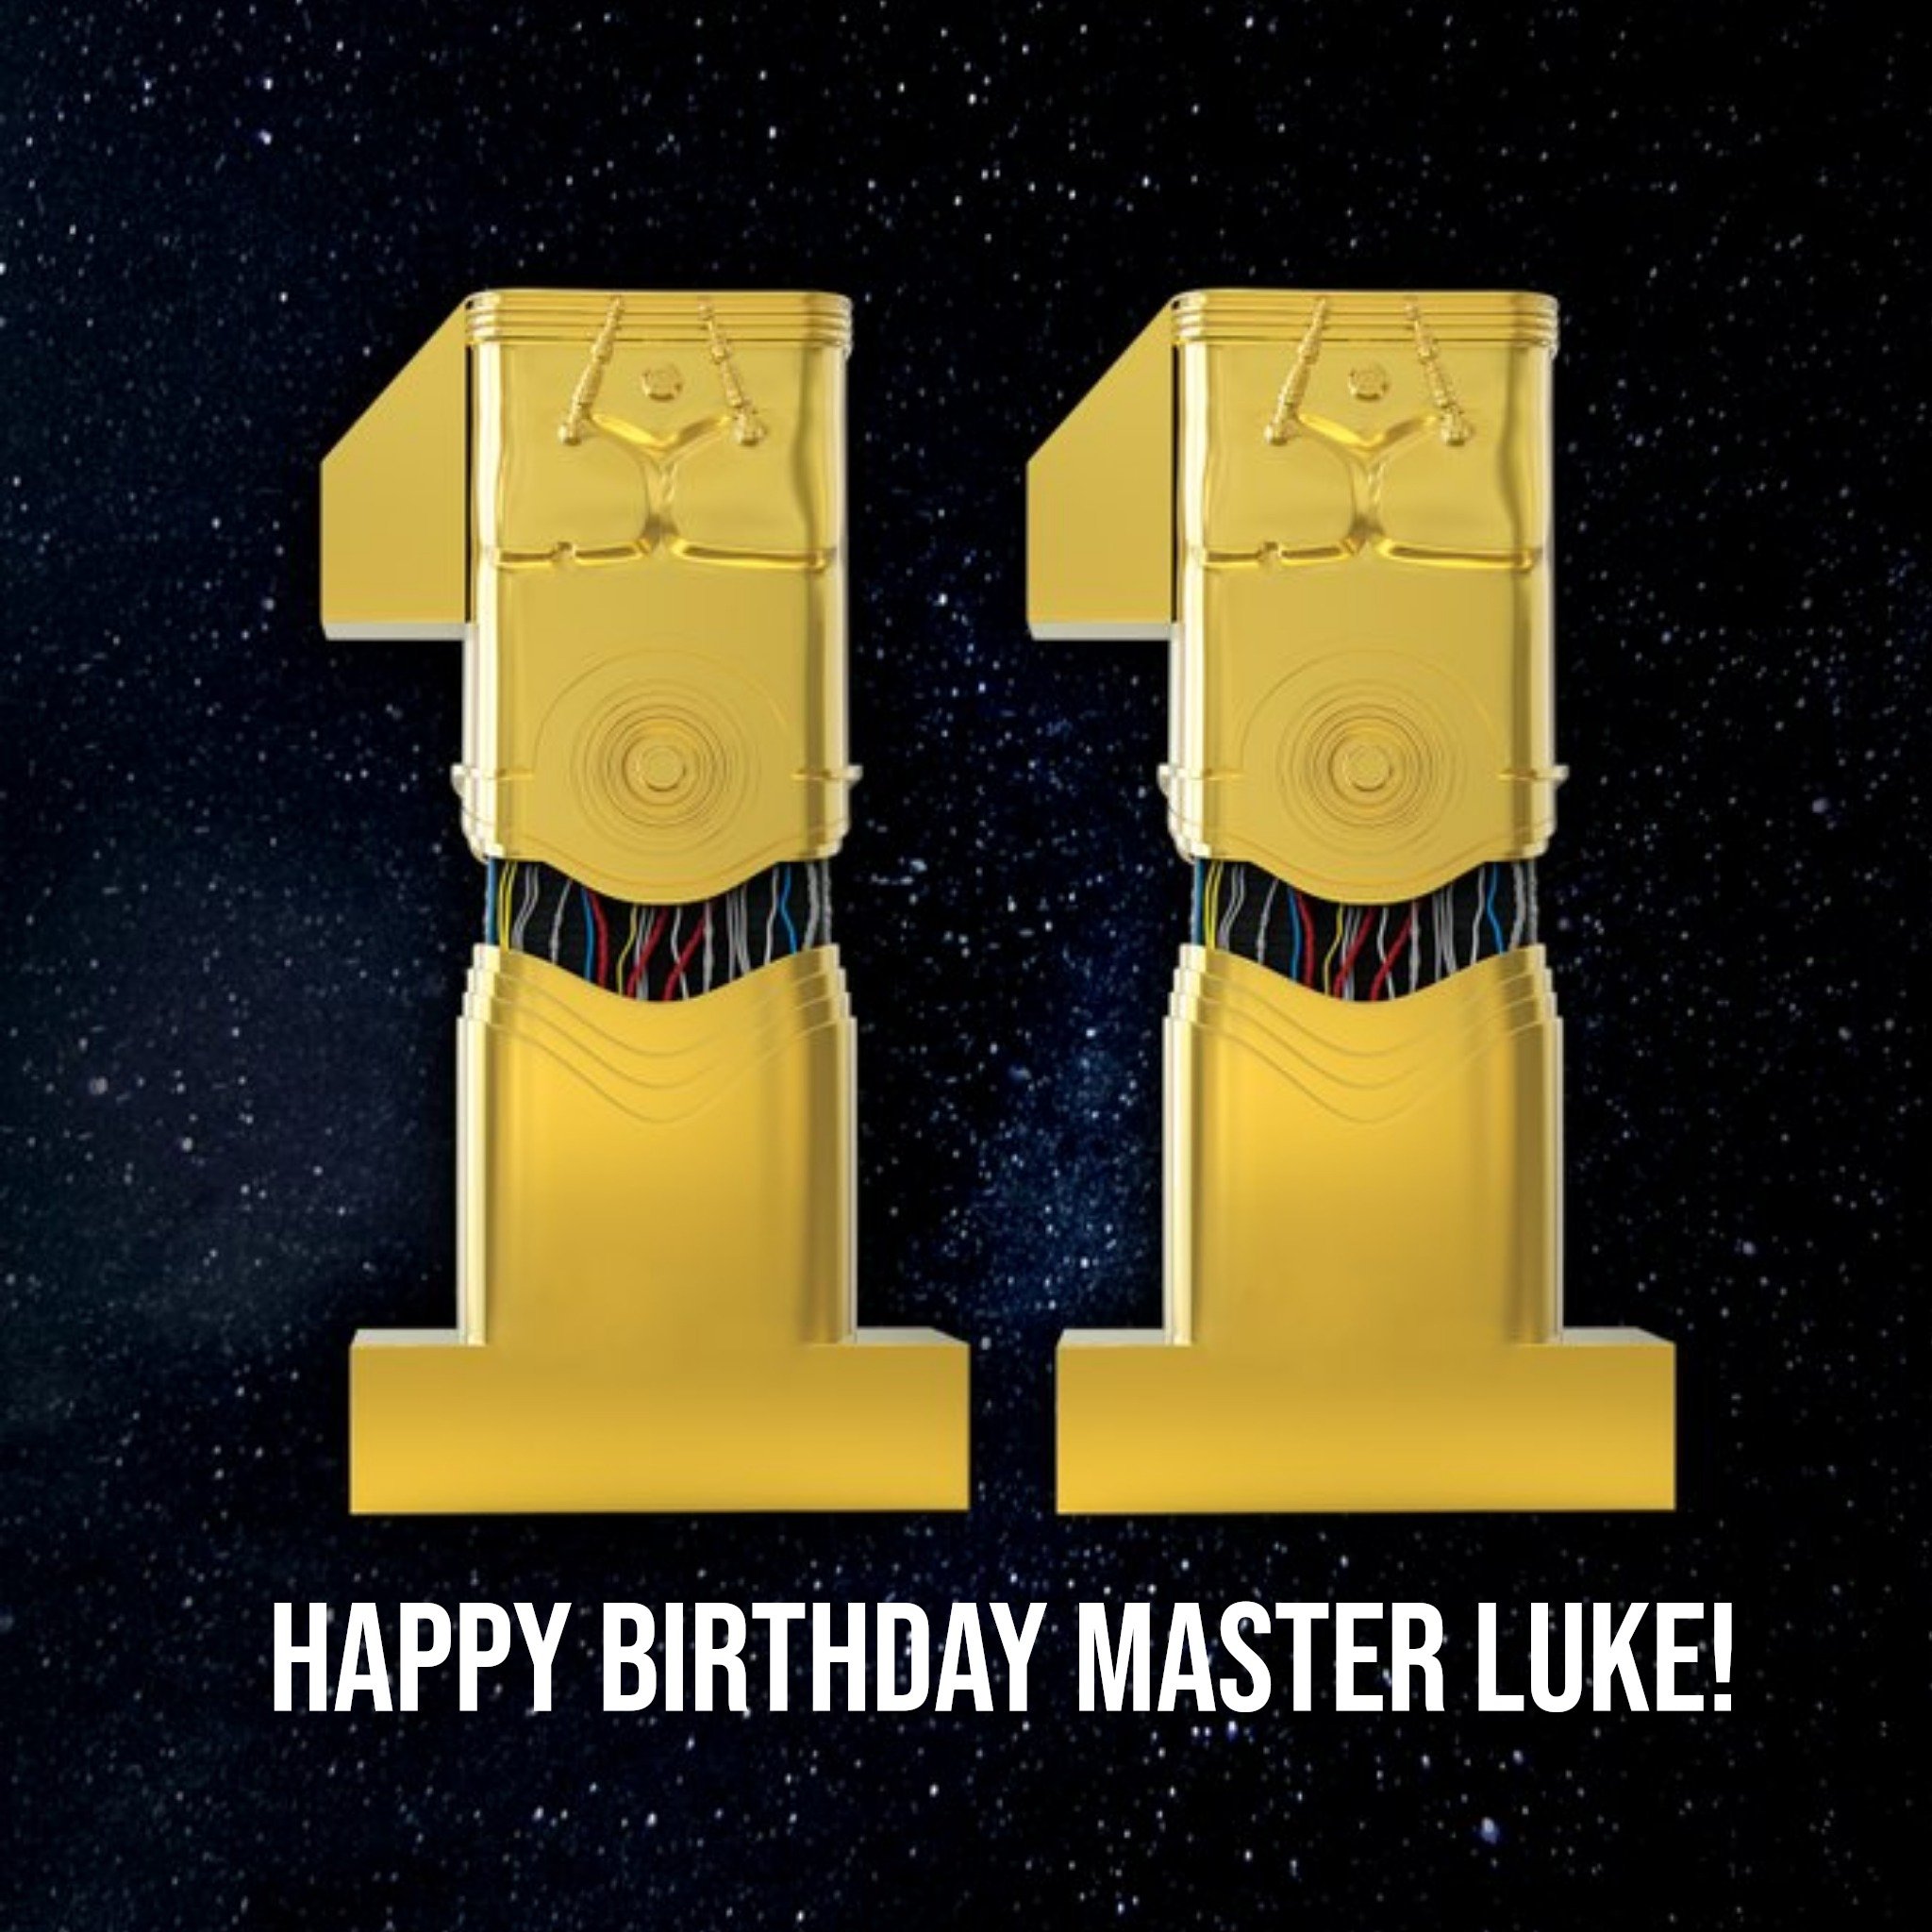 Disney Star Wars 11 Today Birthday Card, Square